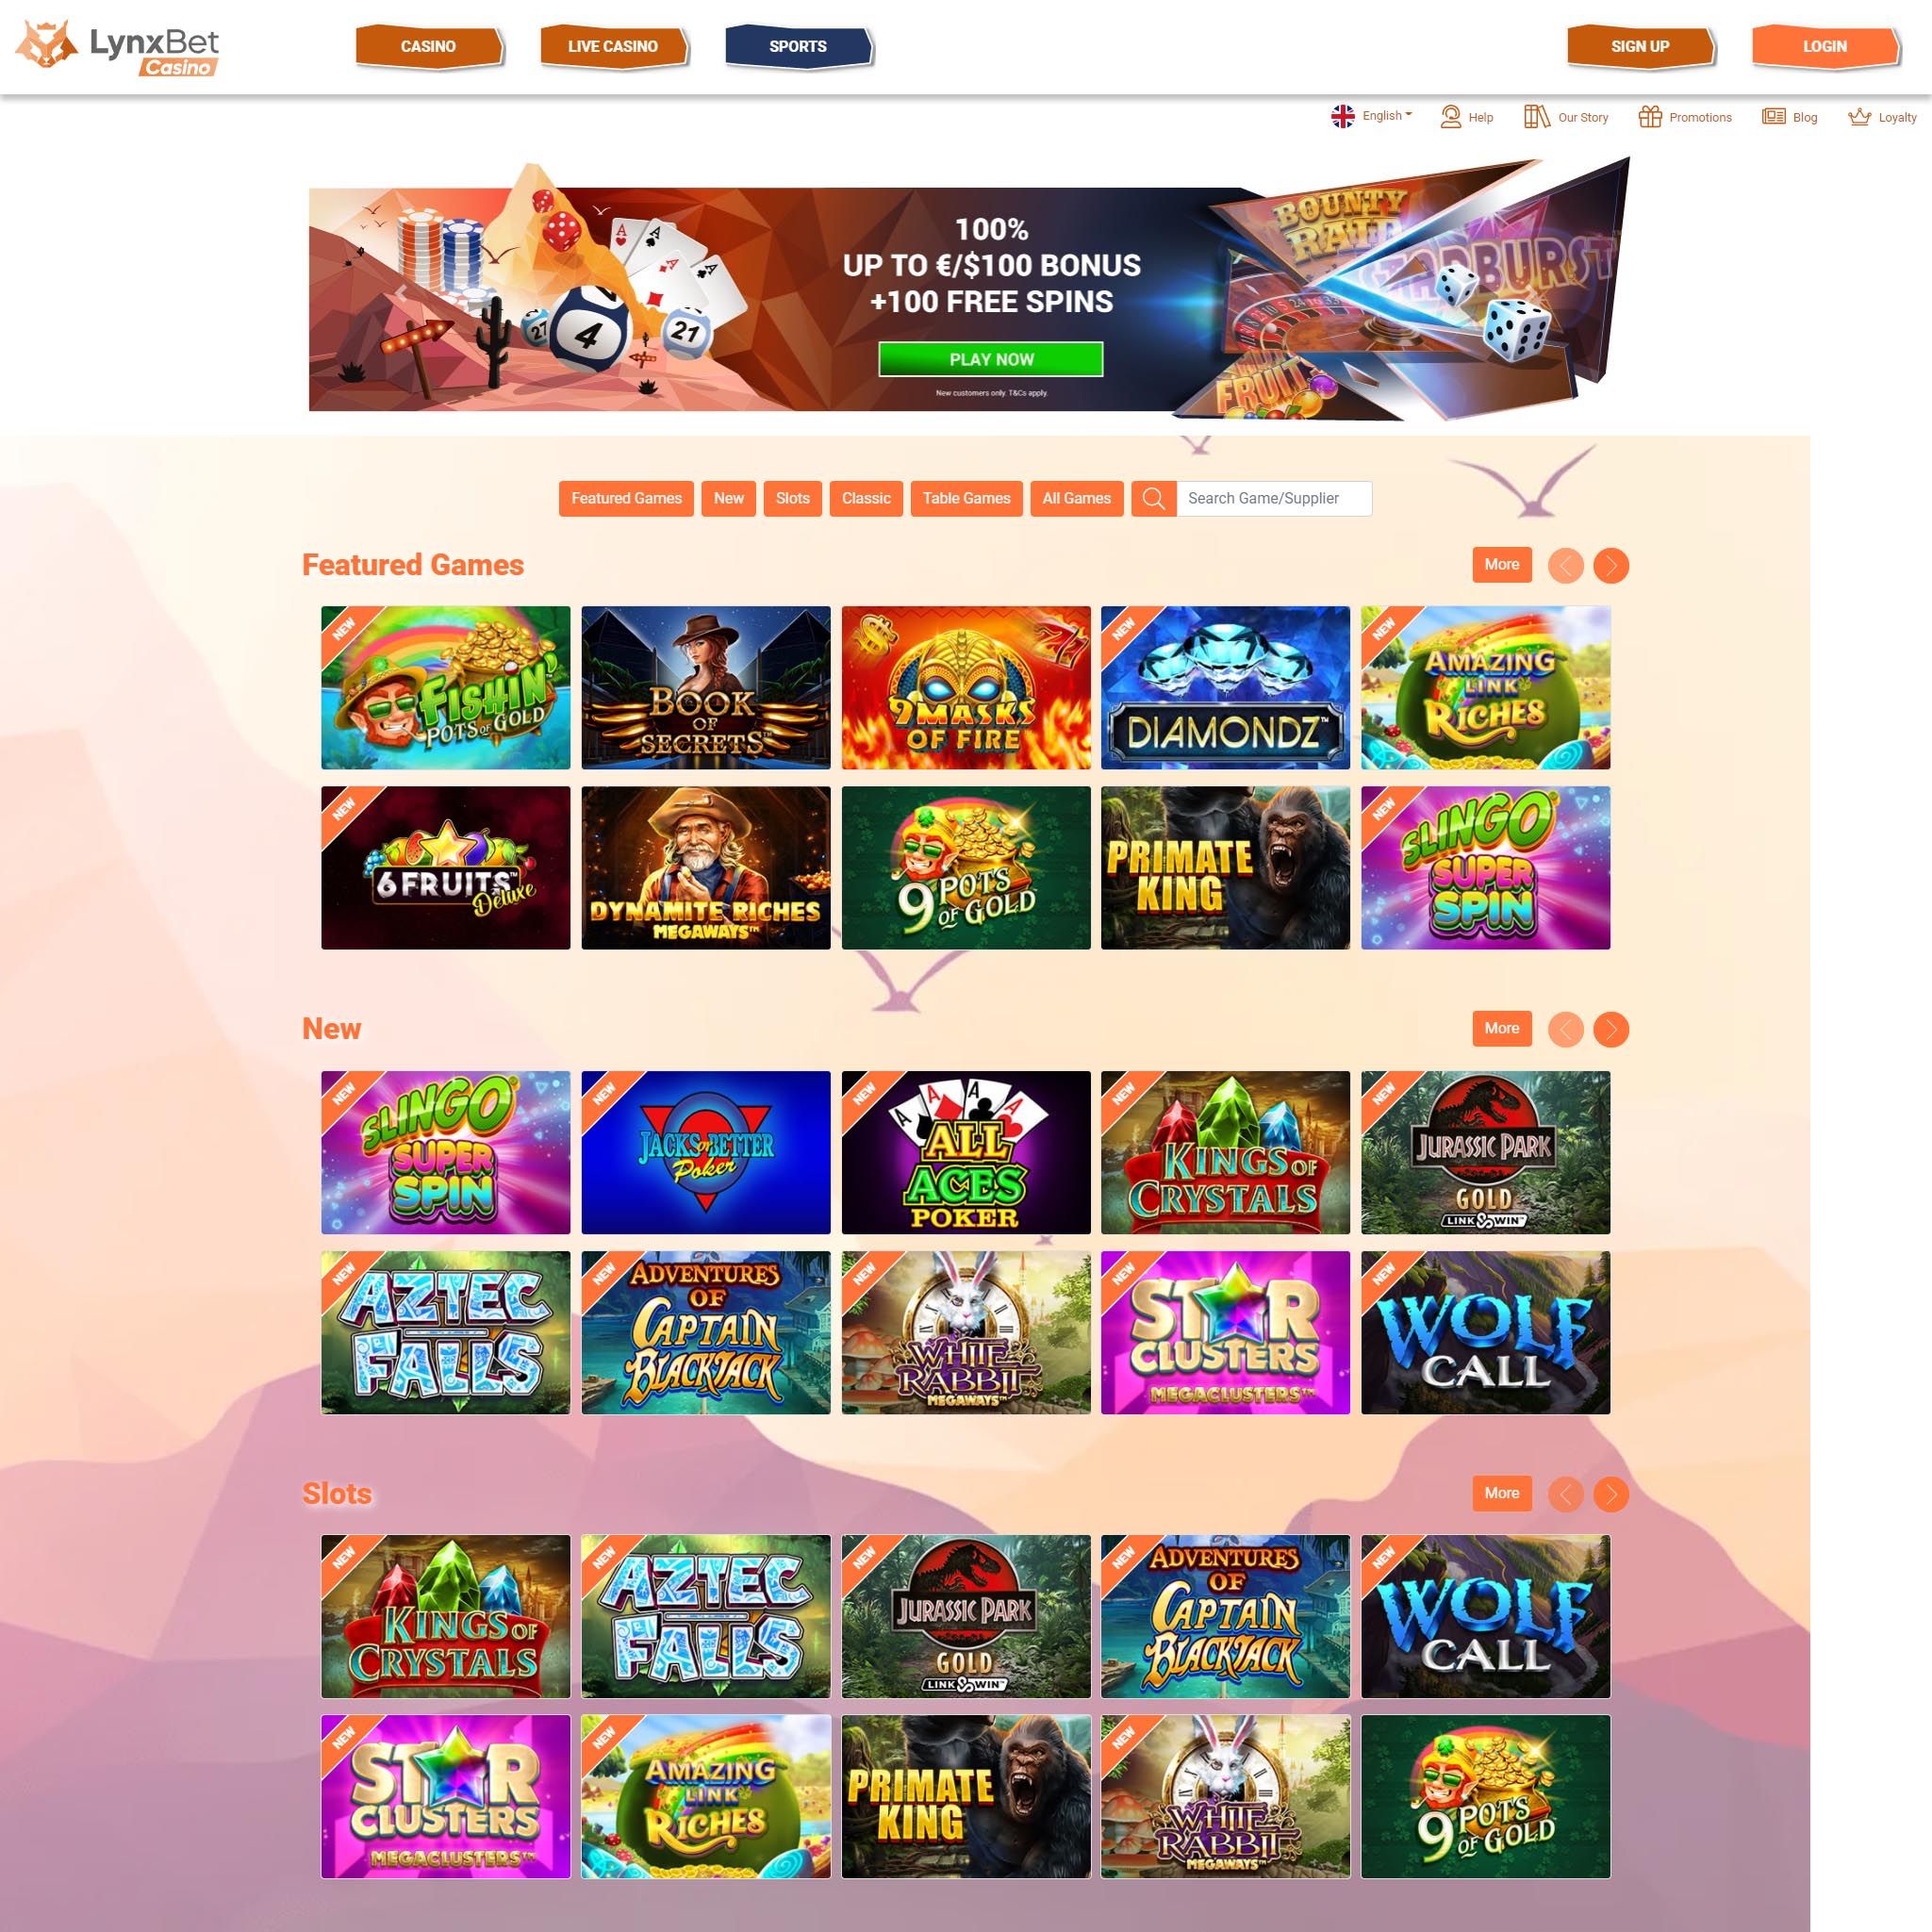 Lynxbet Casino full games catalogue